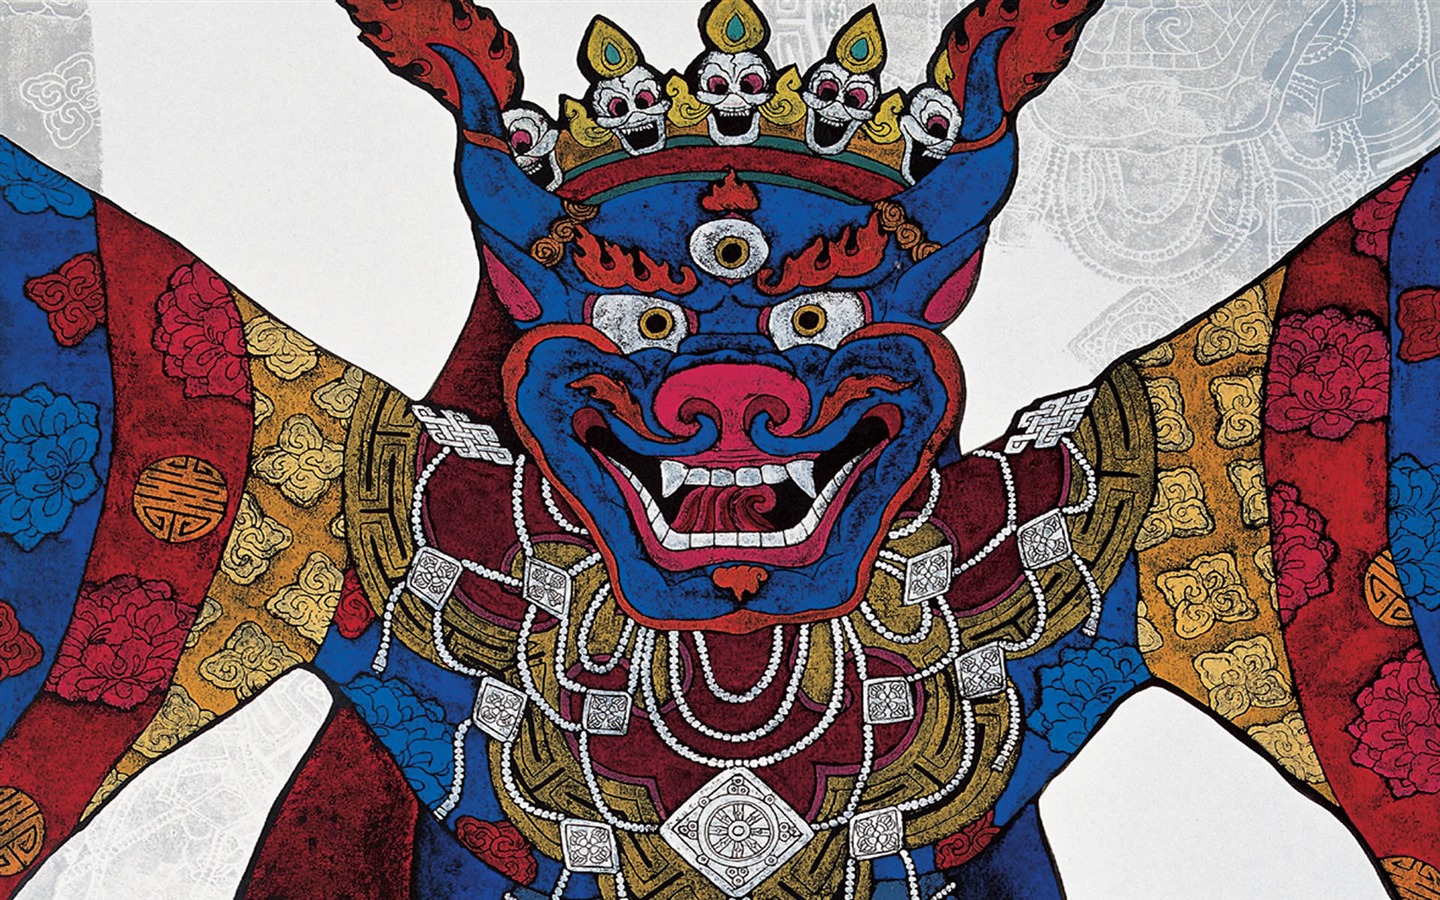 Cheung Pakistan fond d'écran d'impression du Tibet (1) #14 - 1440x900